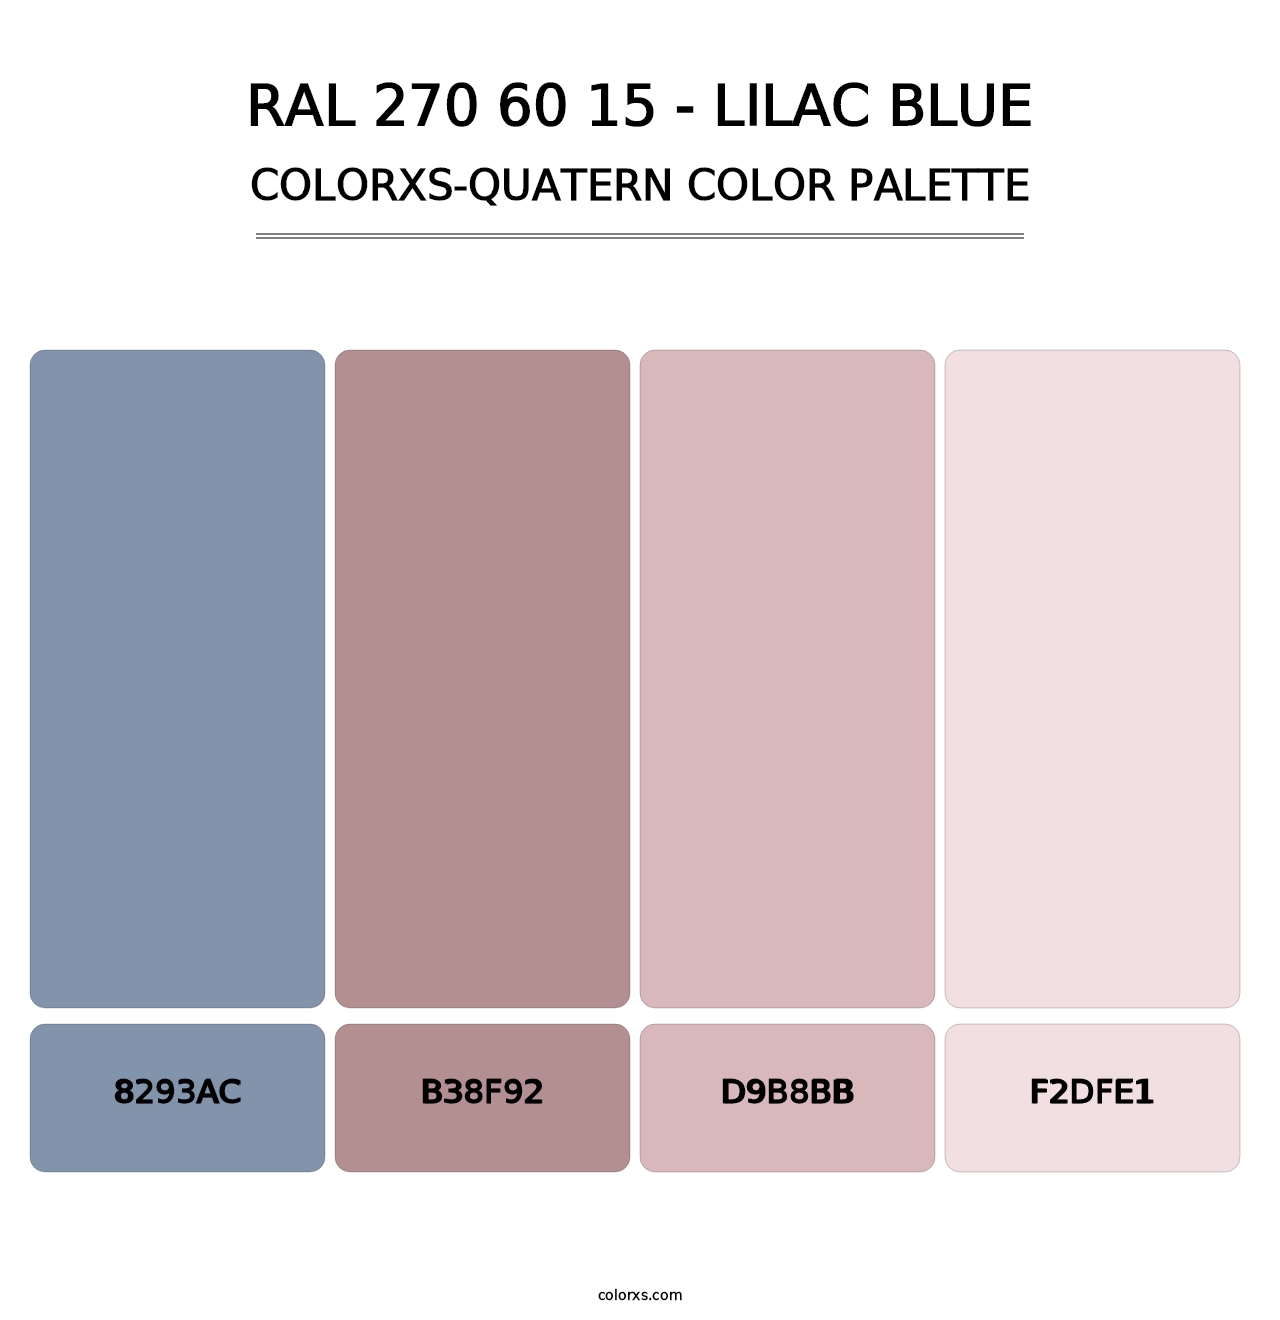 RAL 270 60 15 - Lilac Blue - Colorxs Quatern Palette